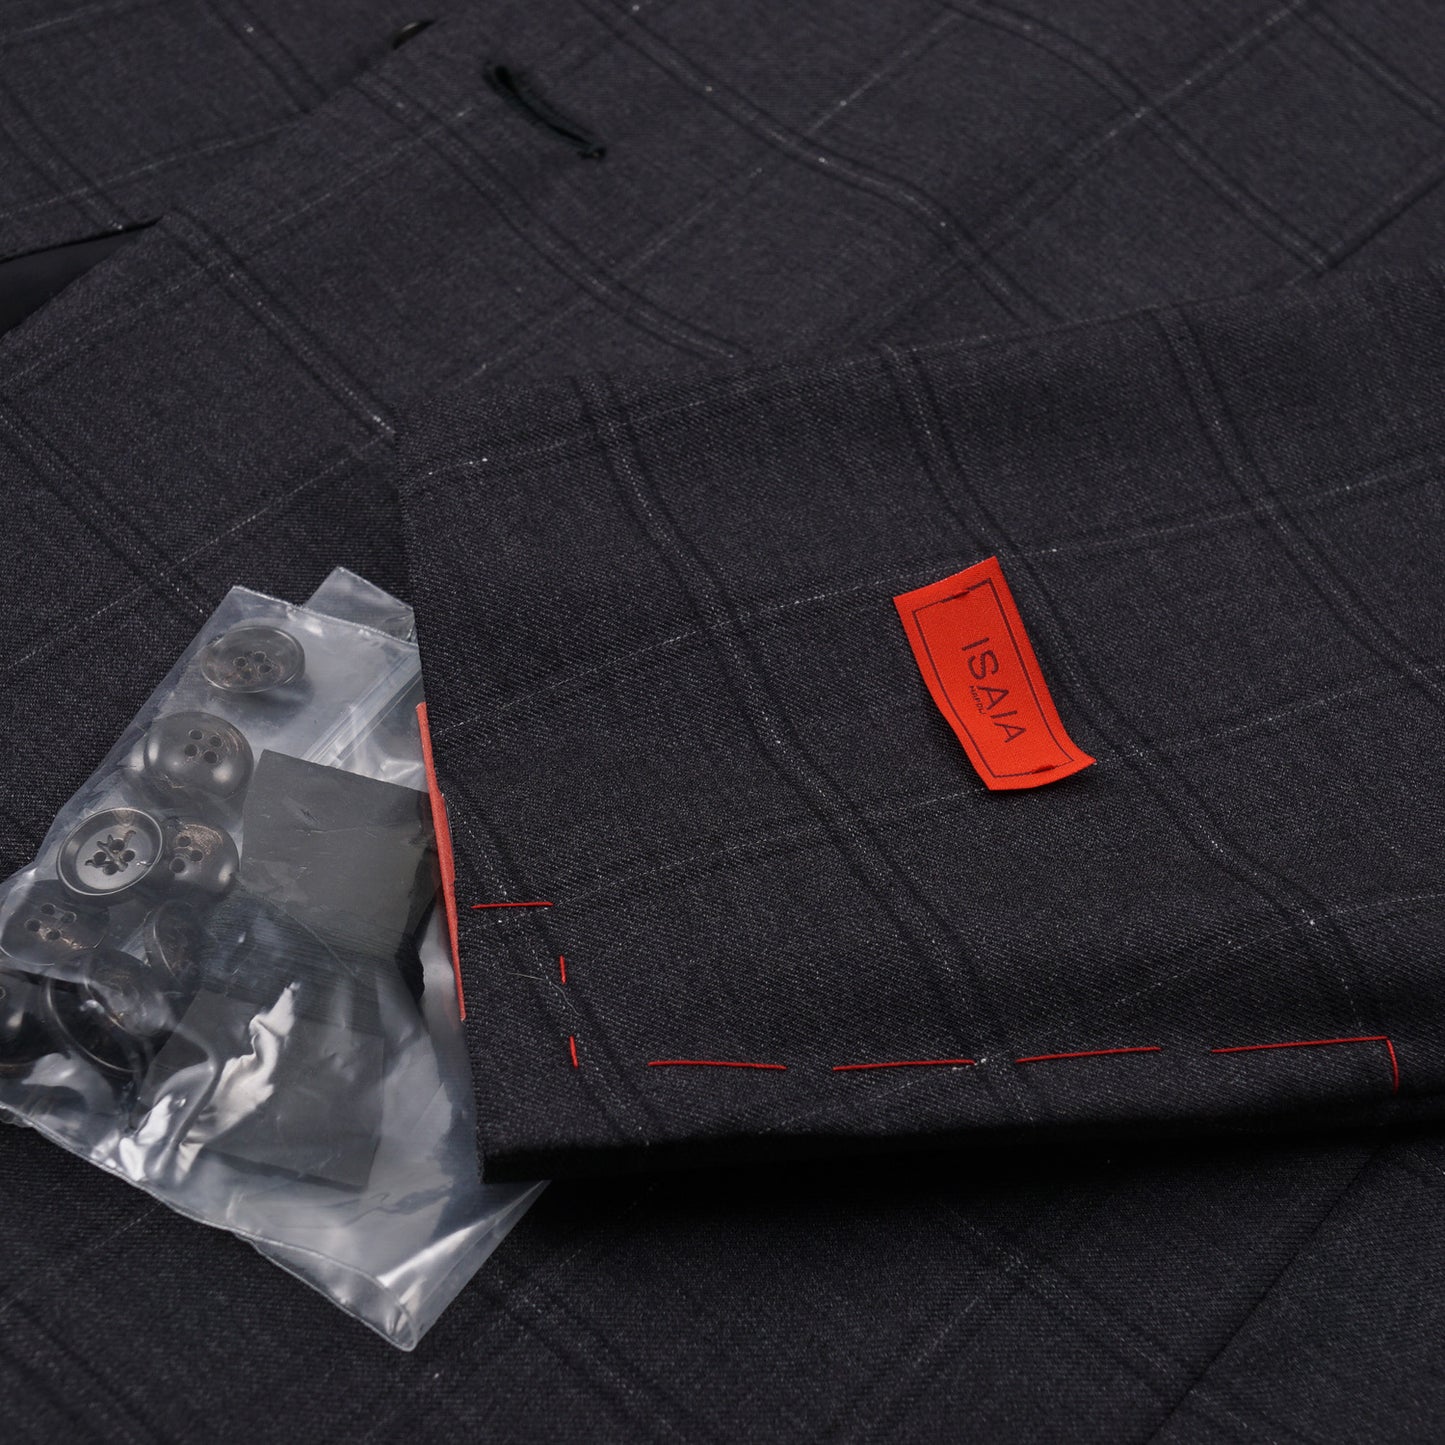 Isaia Slim-Fit 'Sanita' 140s Wool Suit - Top Shelf Apparel